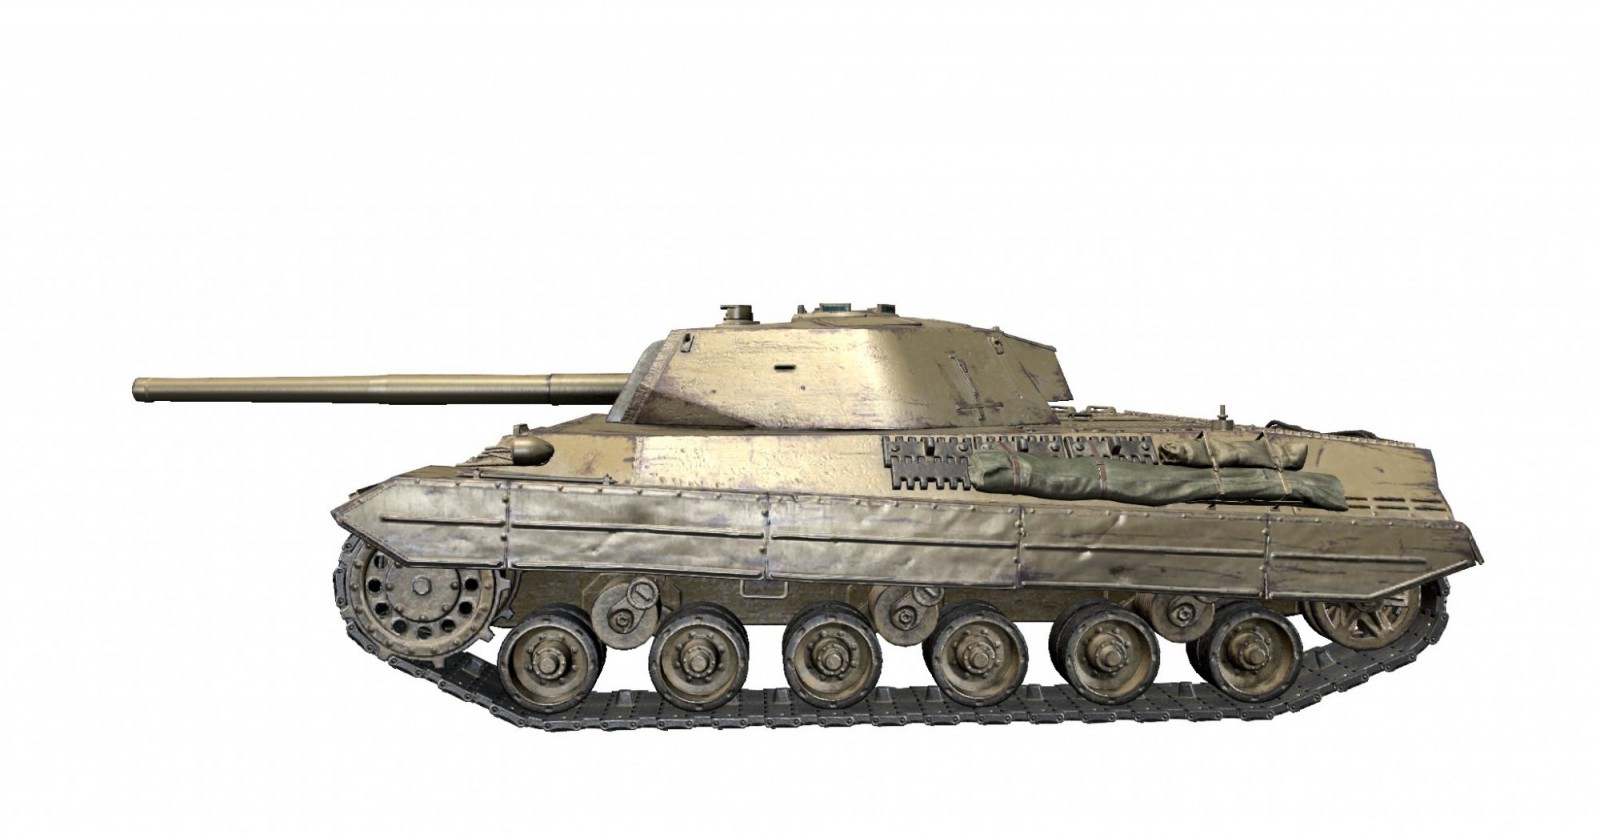 Х o o 9 9 o. Танк p43 bis. Итальянский танк p43 bis. Итальянский танк p43 ter. Танк p 43 ter.